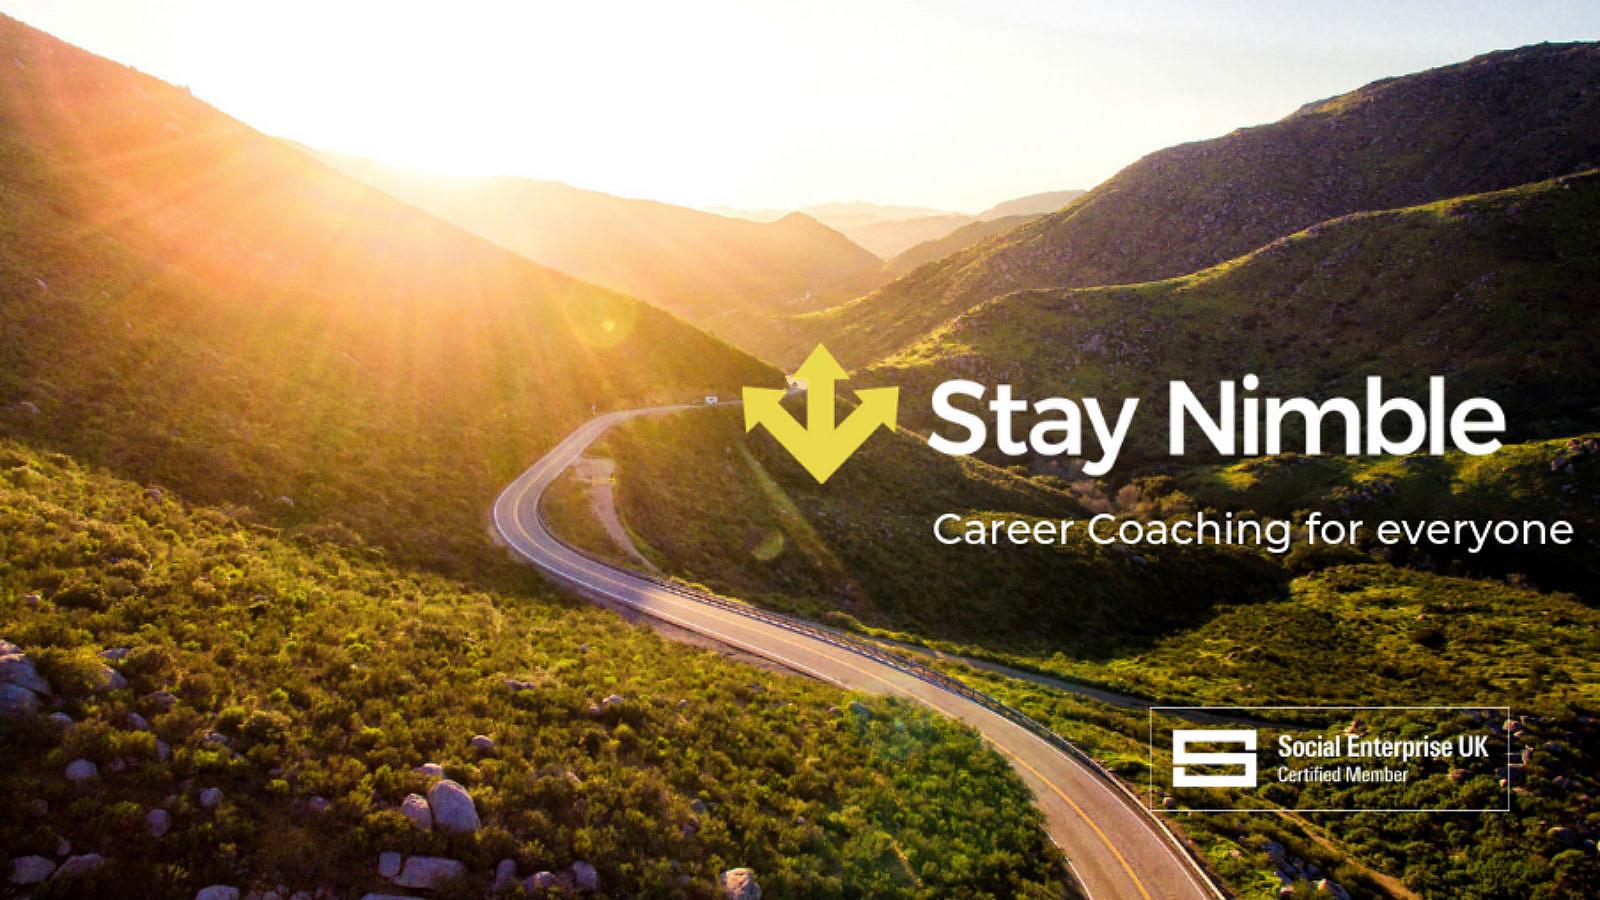 Career coaching startup Stay Nimble raises more than £170k